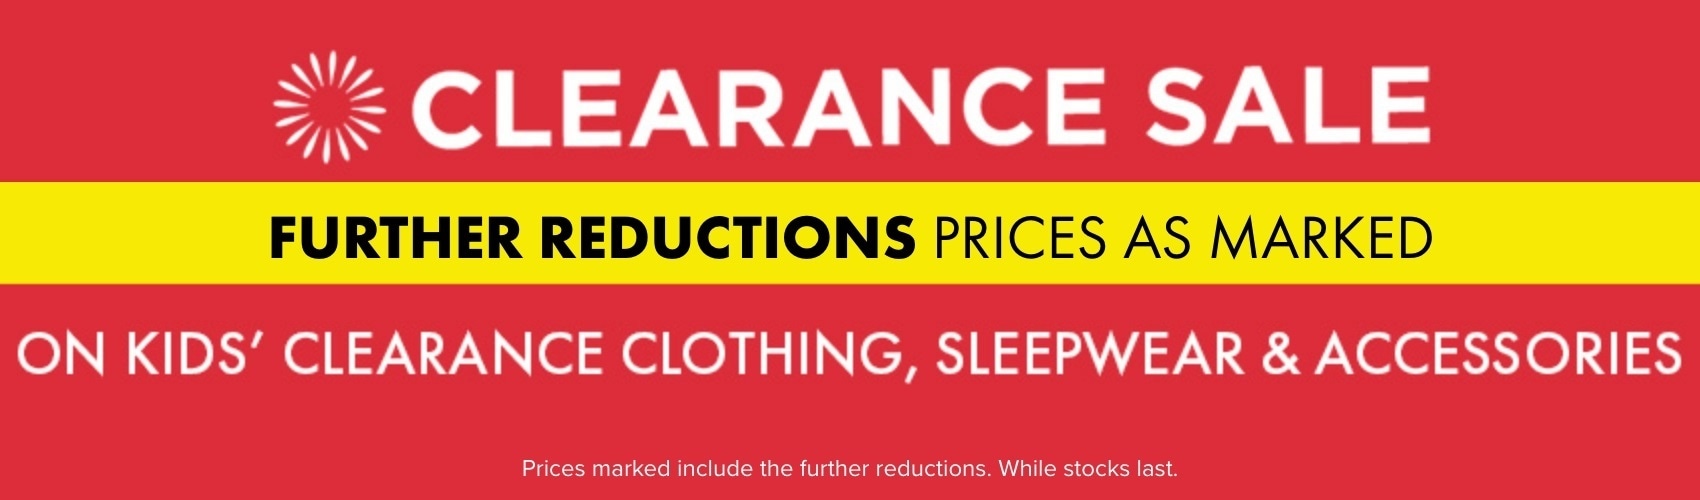 Children's Clearance Sale